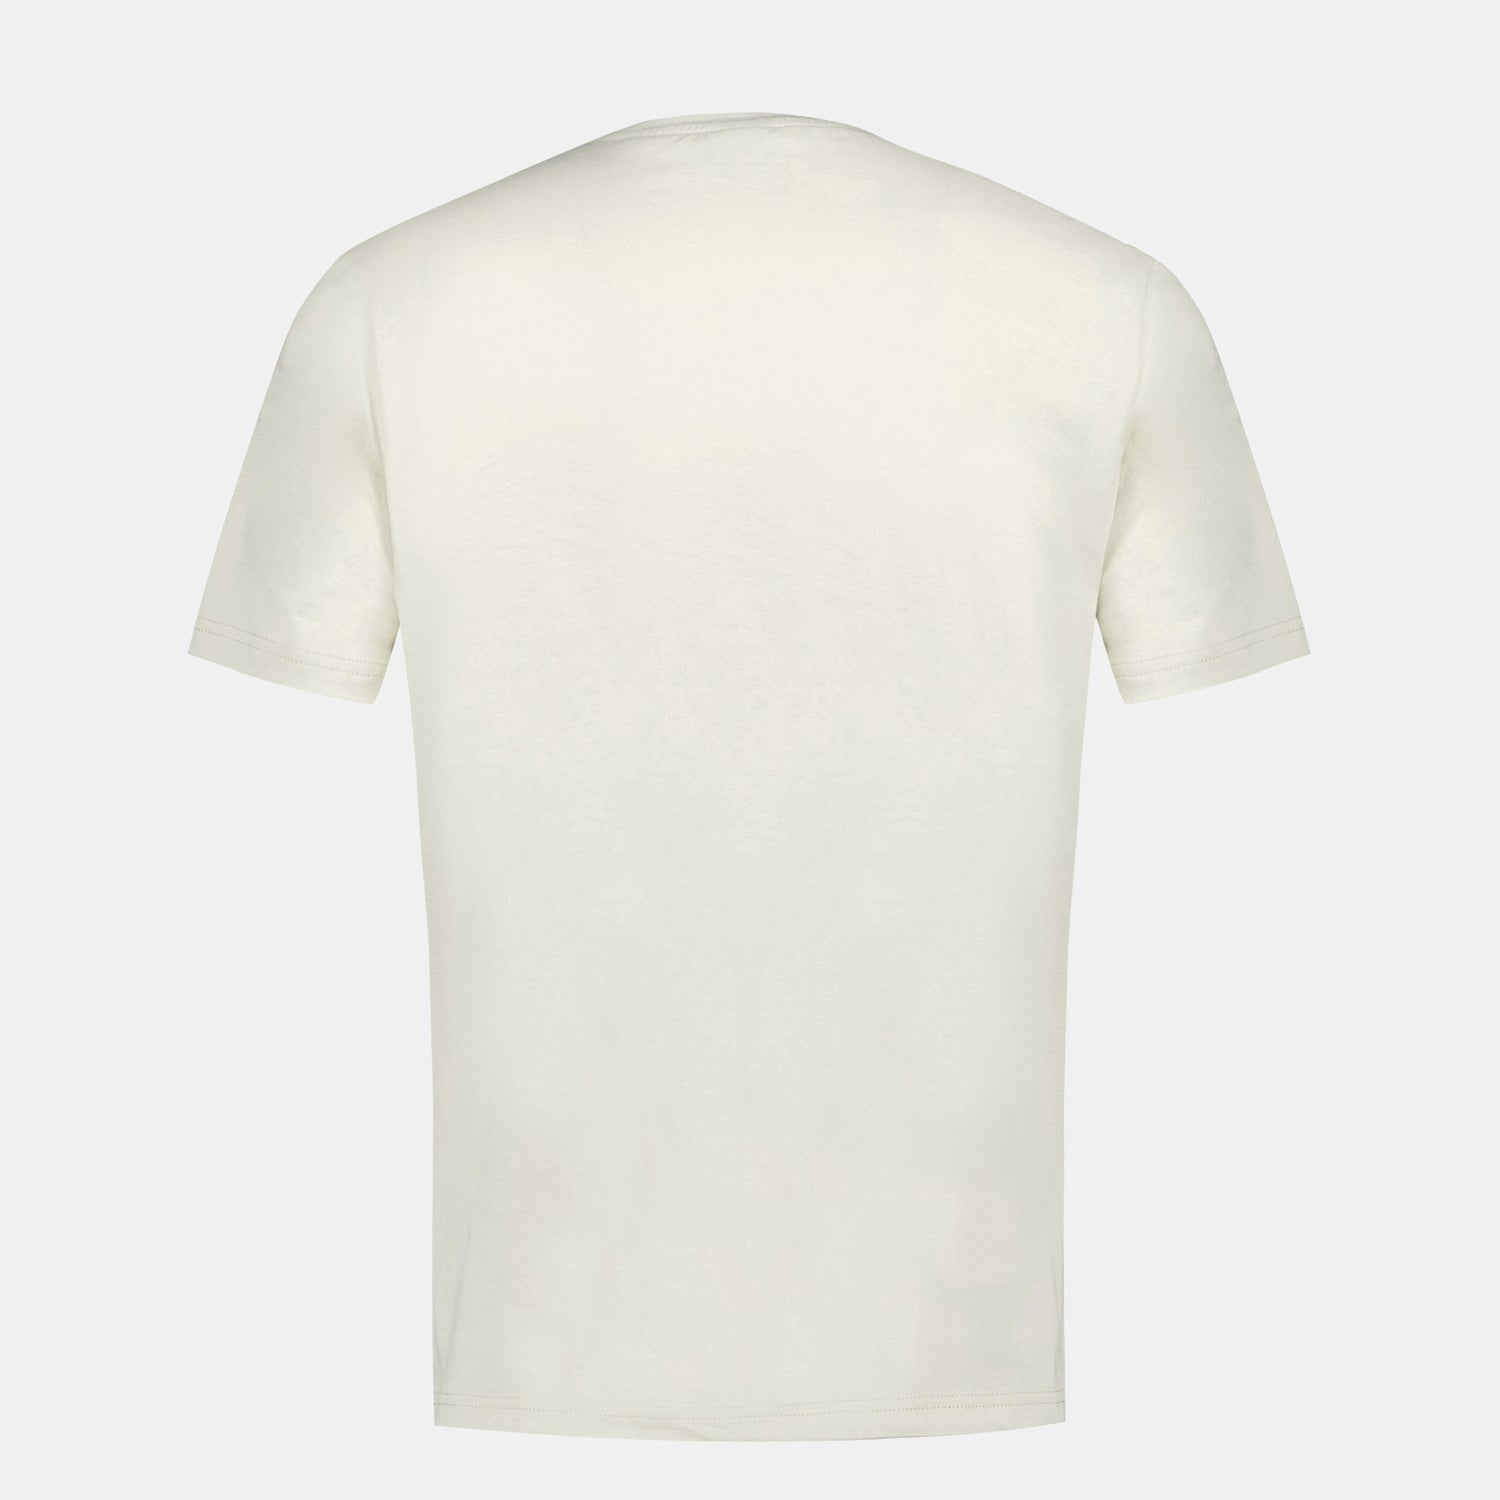 2411176-LA PAIX Tee SS N°1 M peyote  | Camiseta motif «La Paix» Hombre